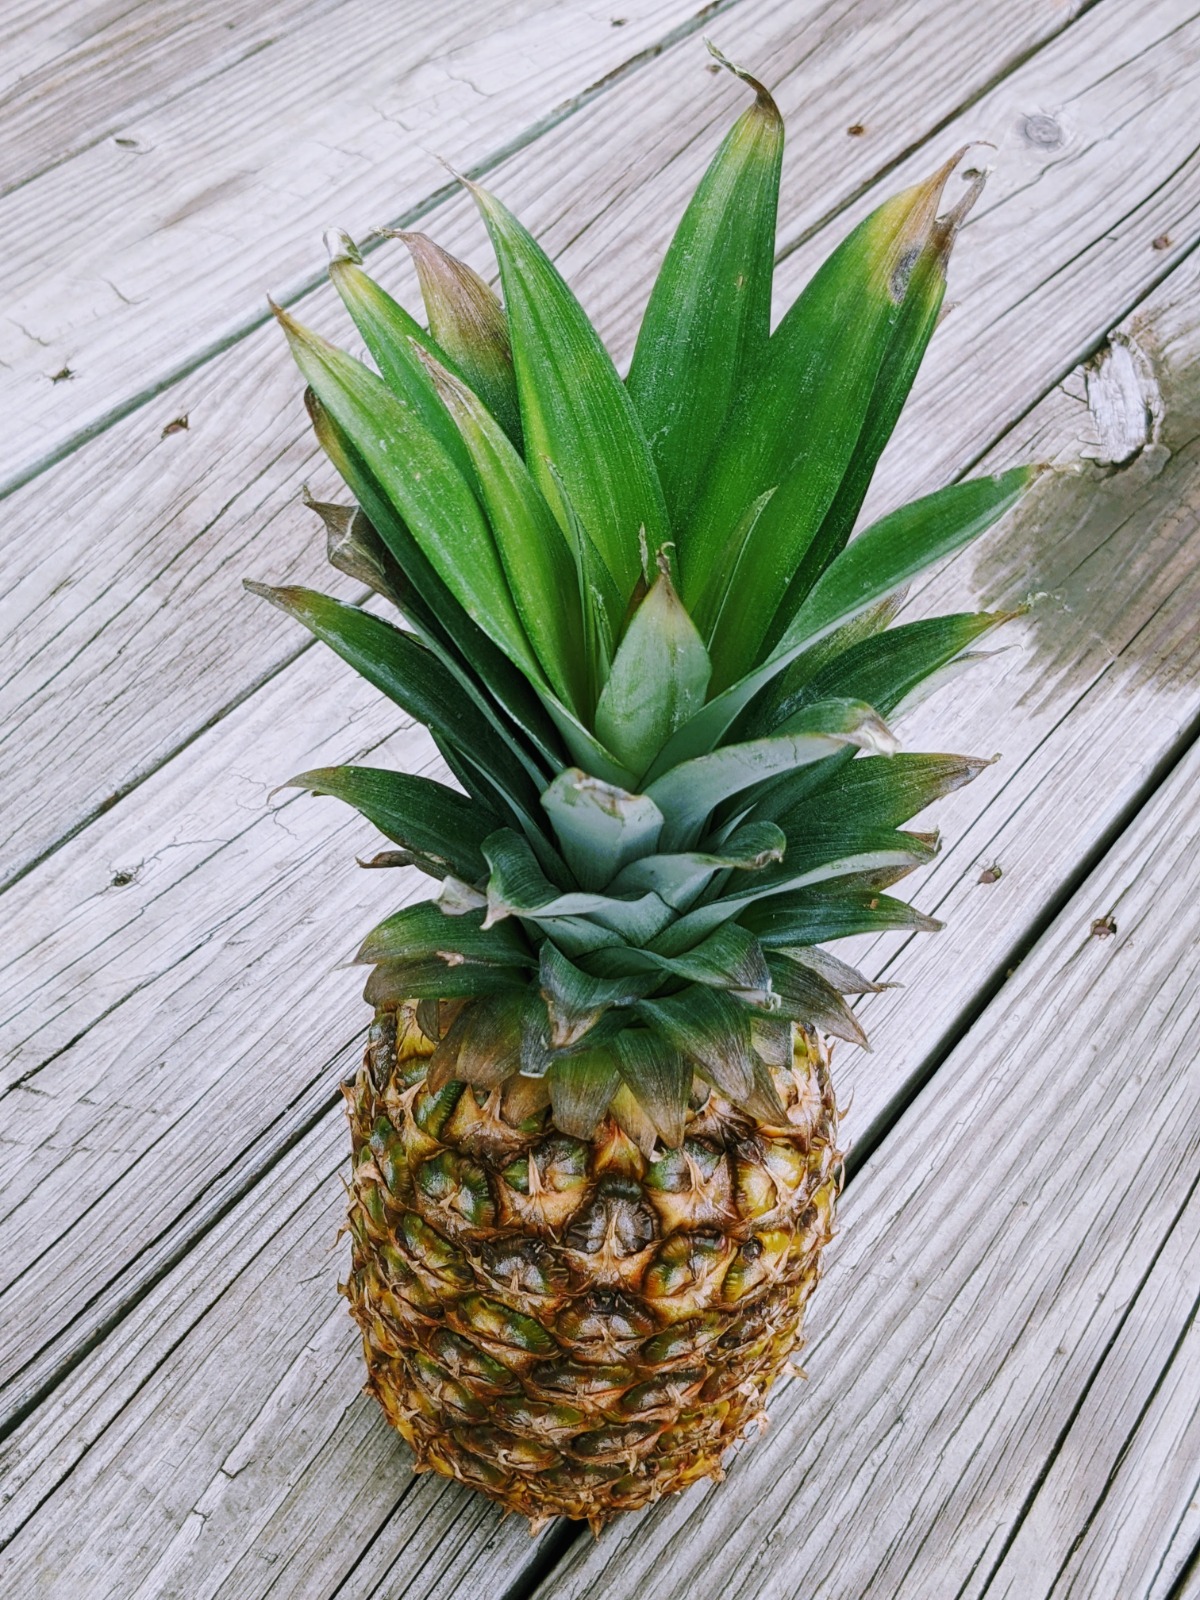 Beautiful, fresh pineapple on the deck